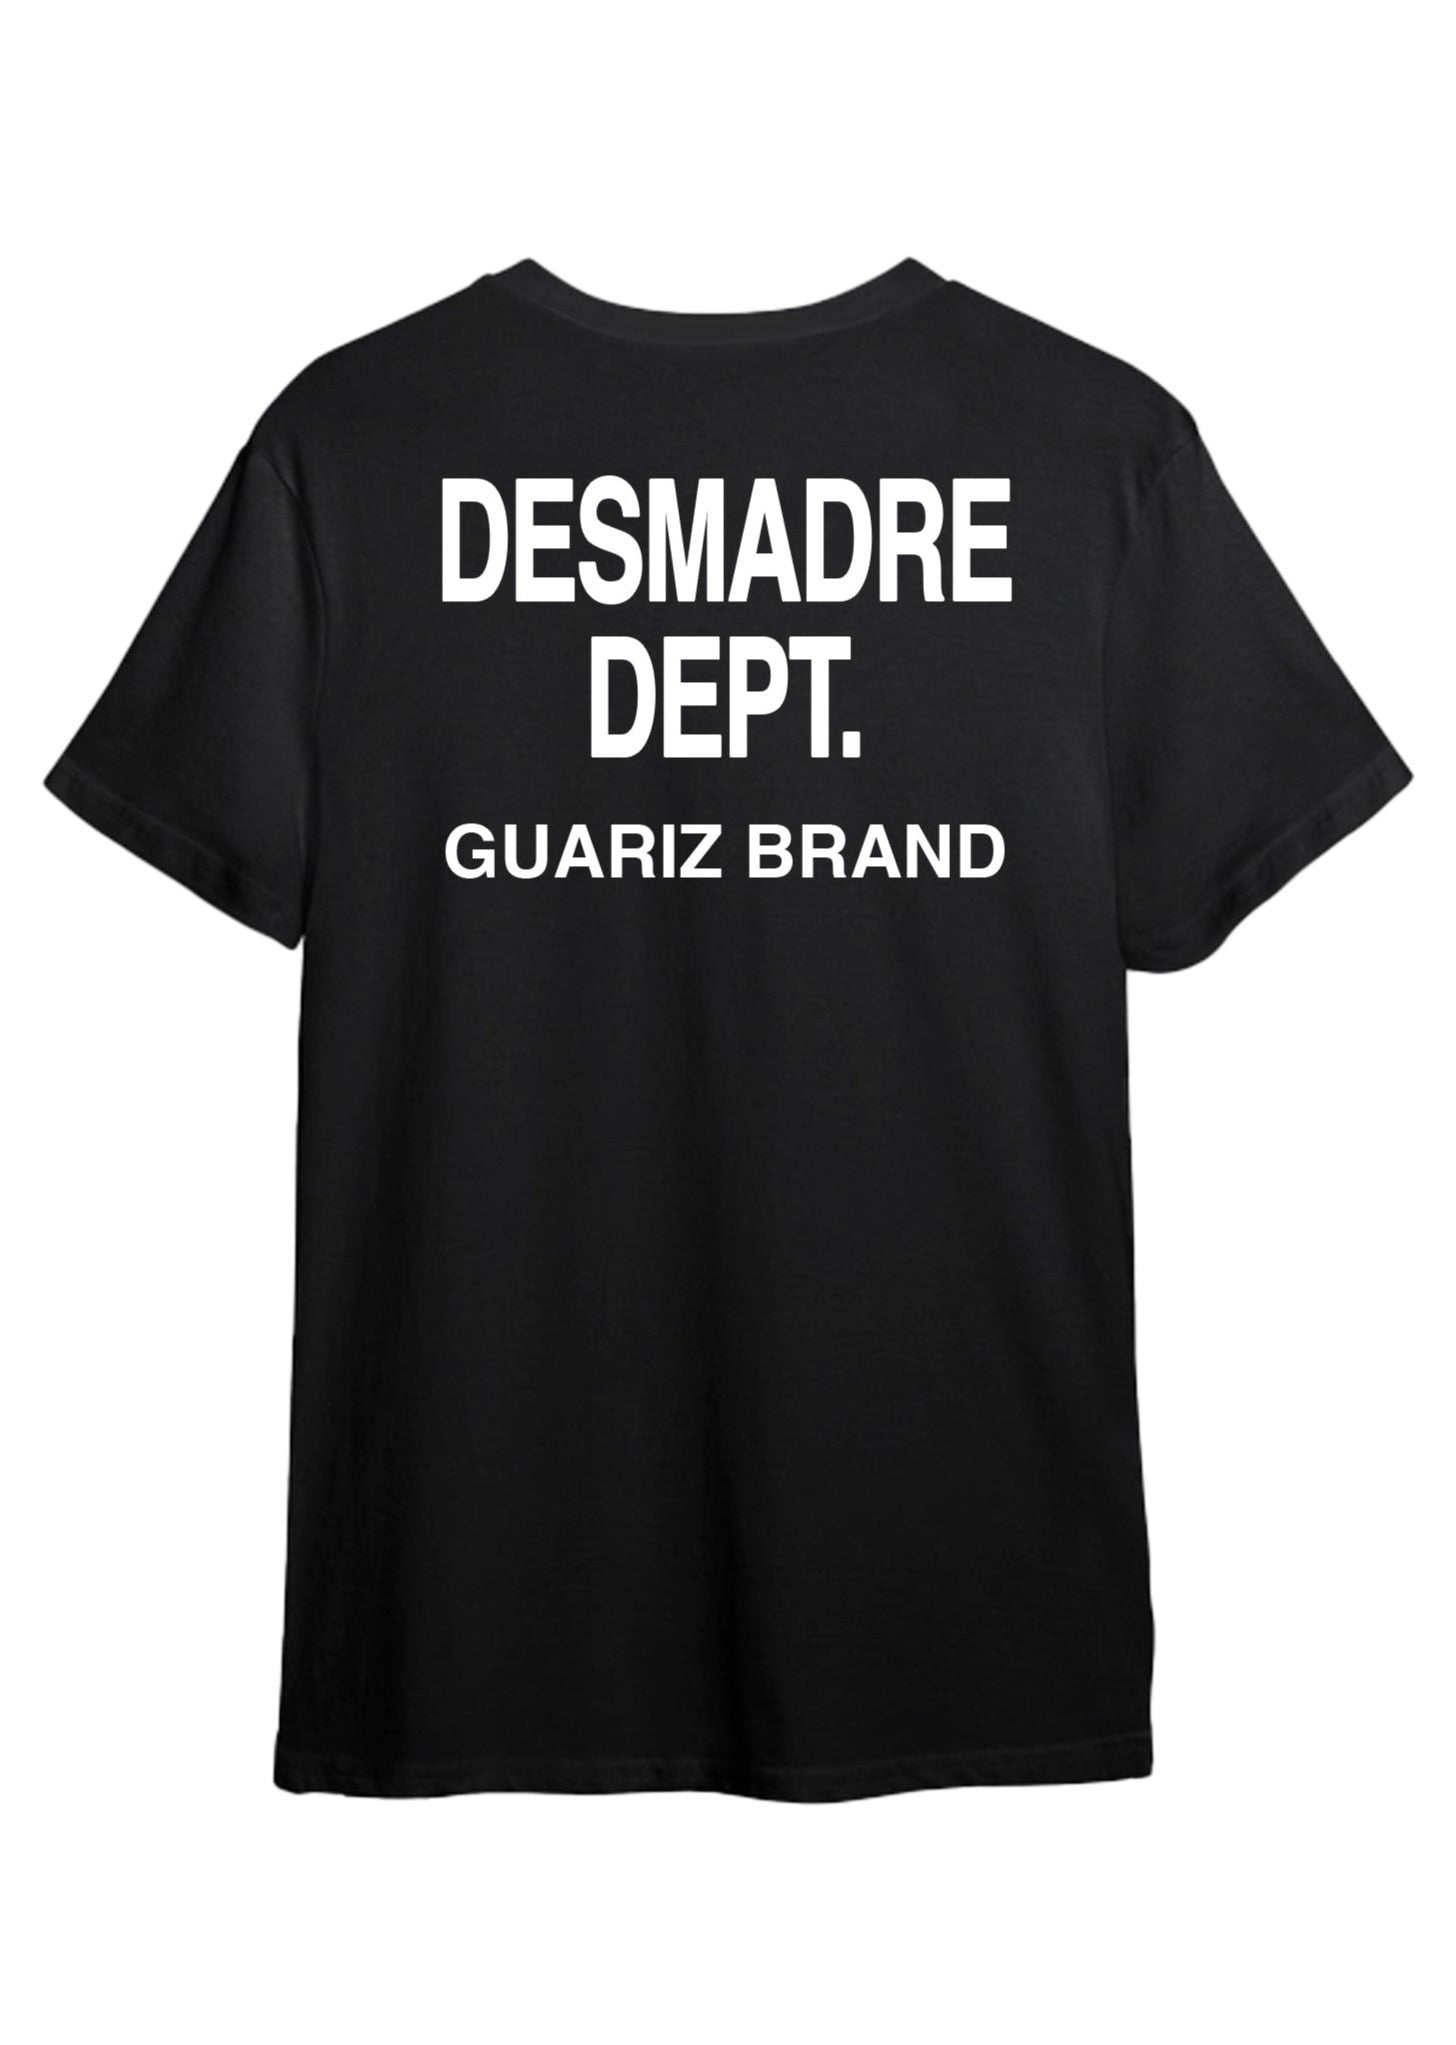 DESMADRE DEPT. T-SHIRT ™ (BLACK)